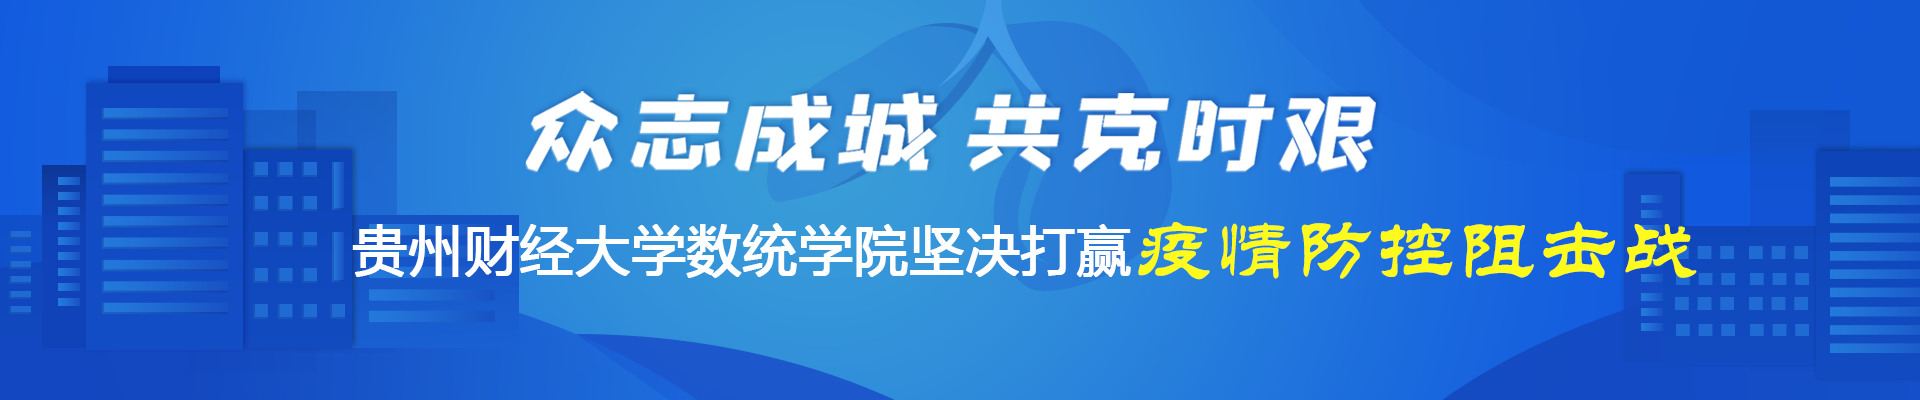 beat365在线体育(中国)股份有限公司官网坚决打赢疫情防控阻击战